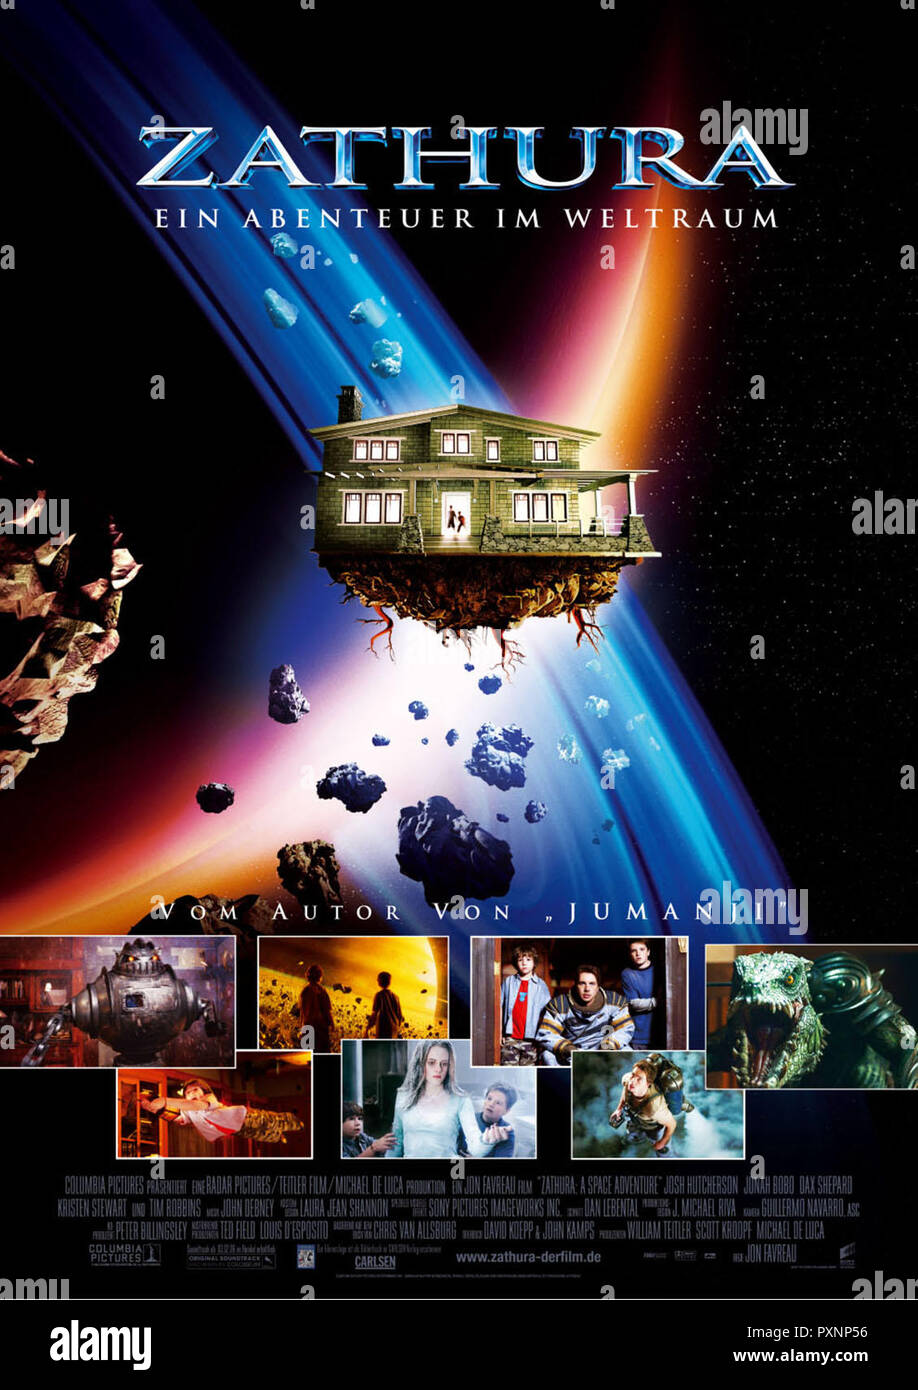 Zathura - Ein Abenteuer im Weltraum aka. Zathura: A Space Adventure, 2005 Regie: Jon Favreau, Filmplakat Stock Photo